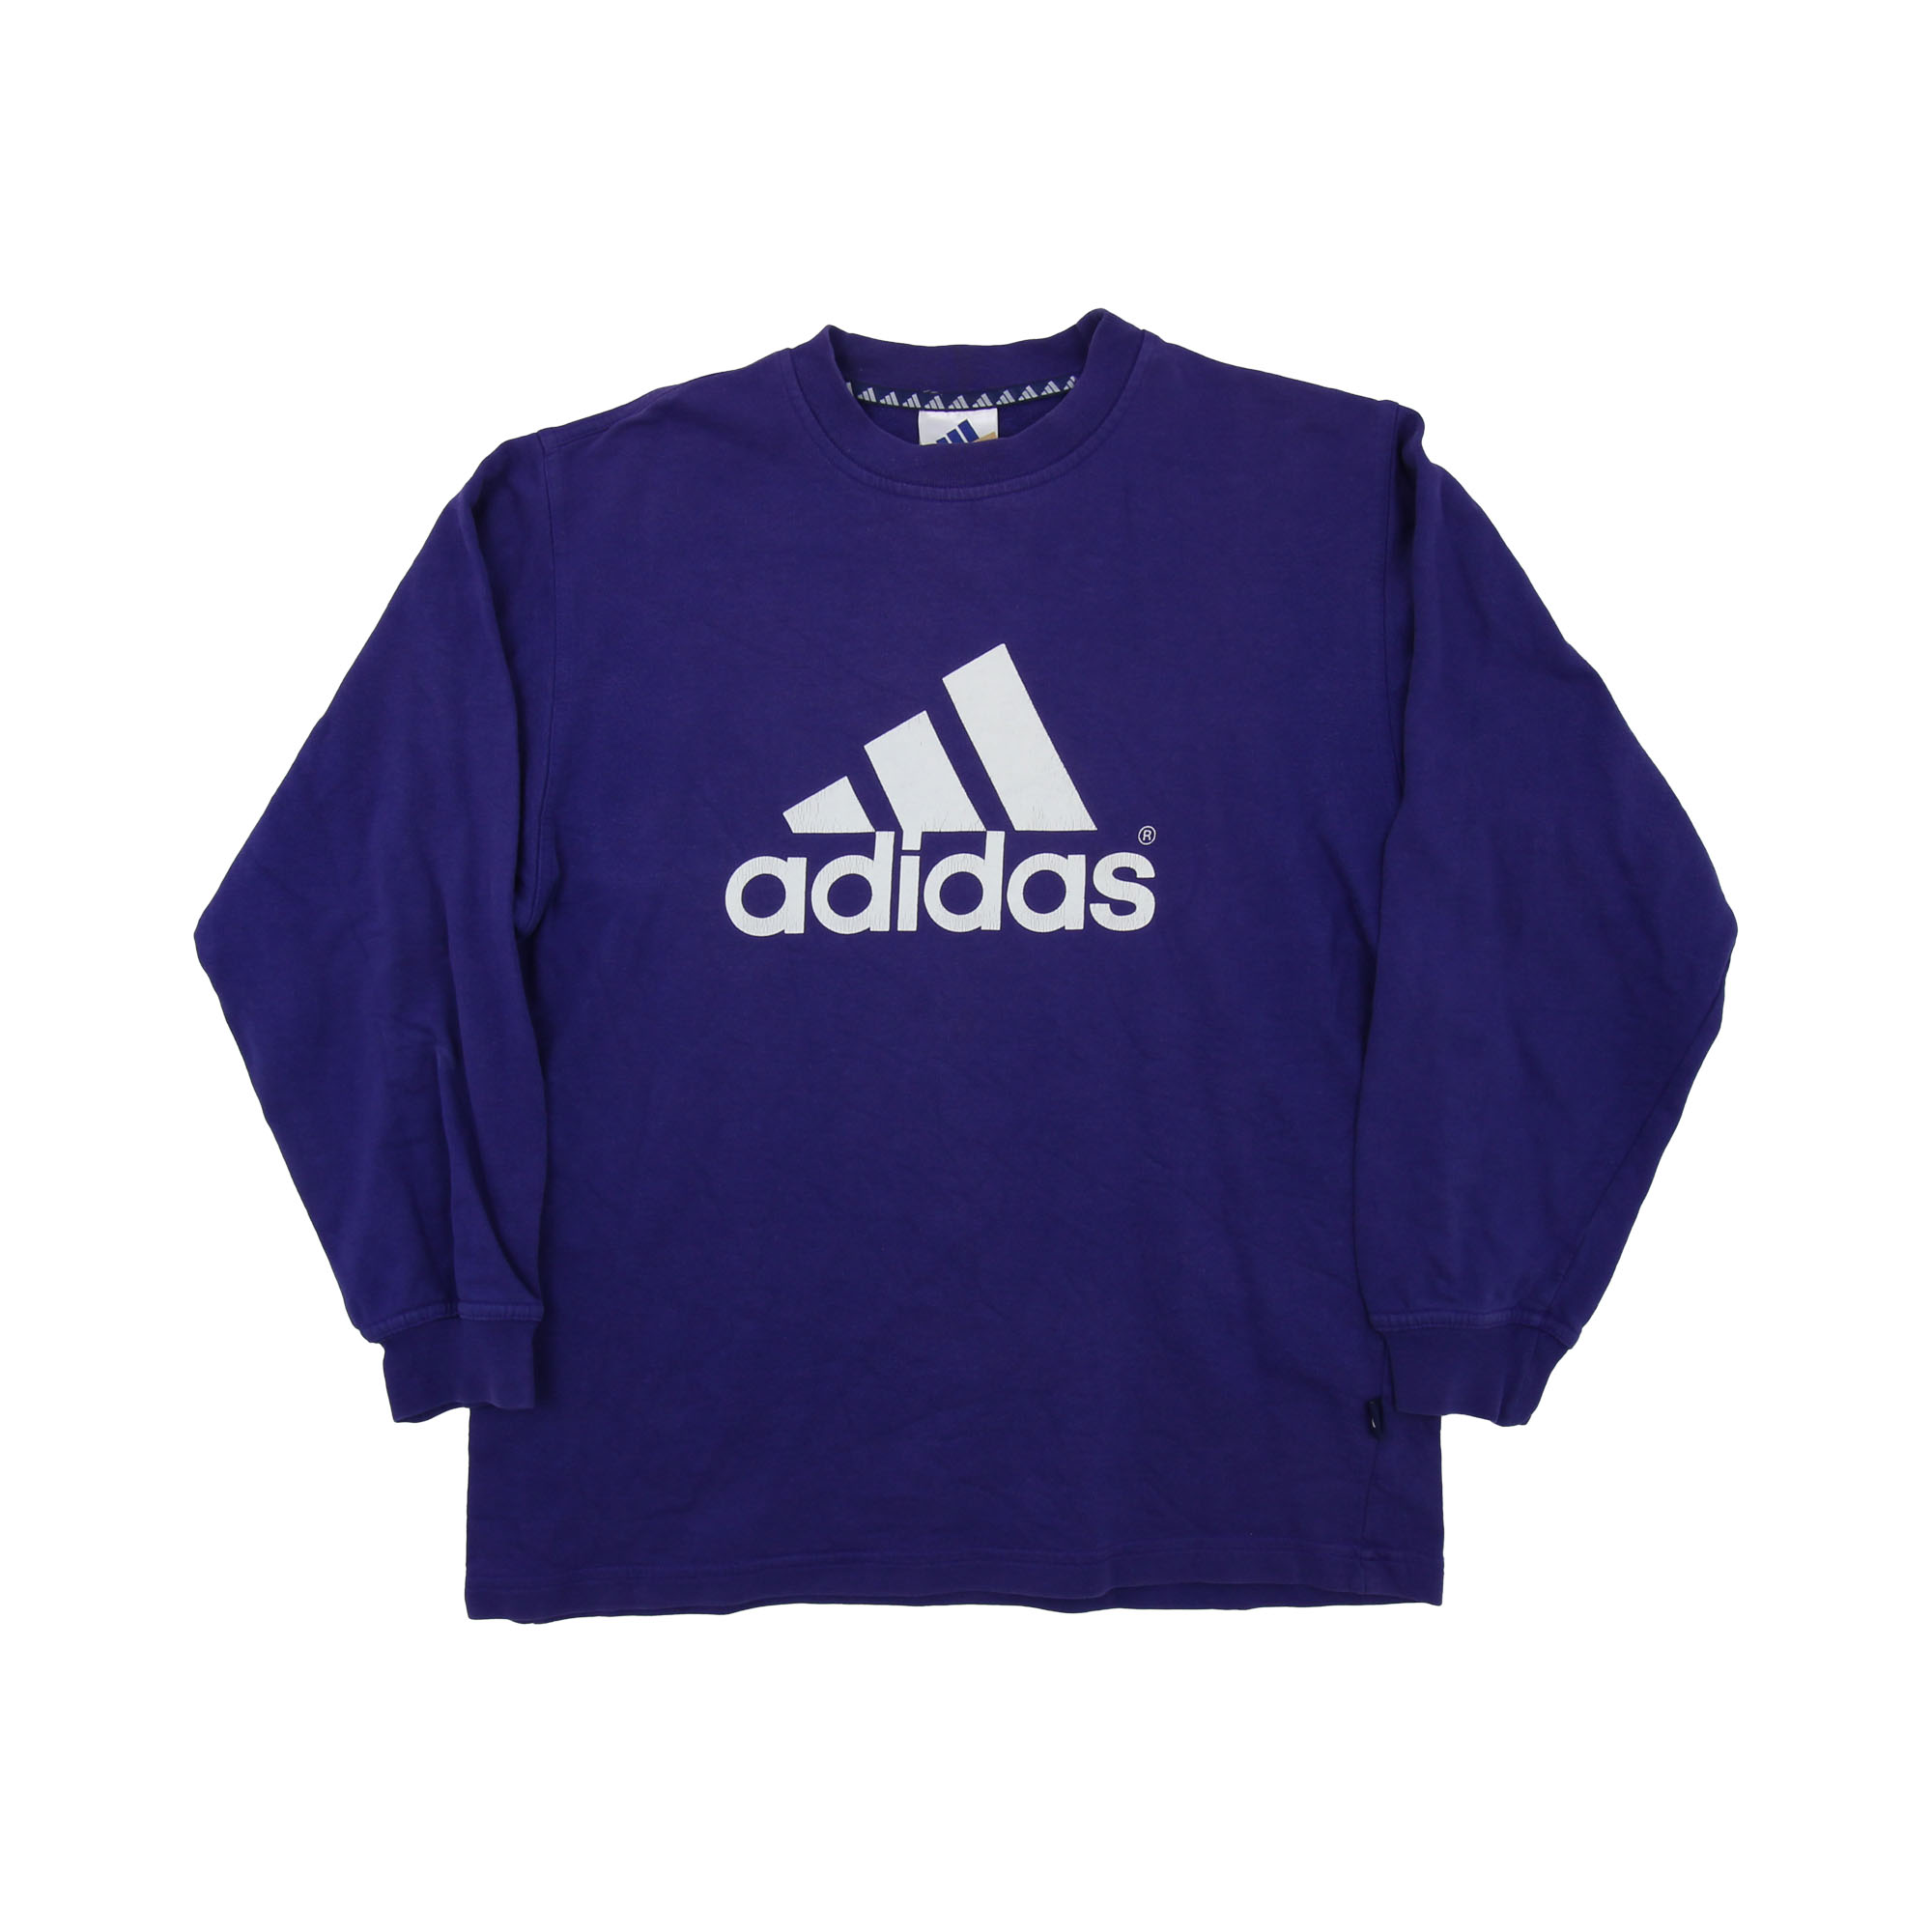 Adidas Sweatshirt Purple -  M/L